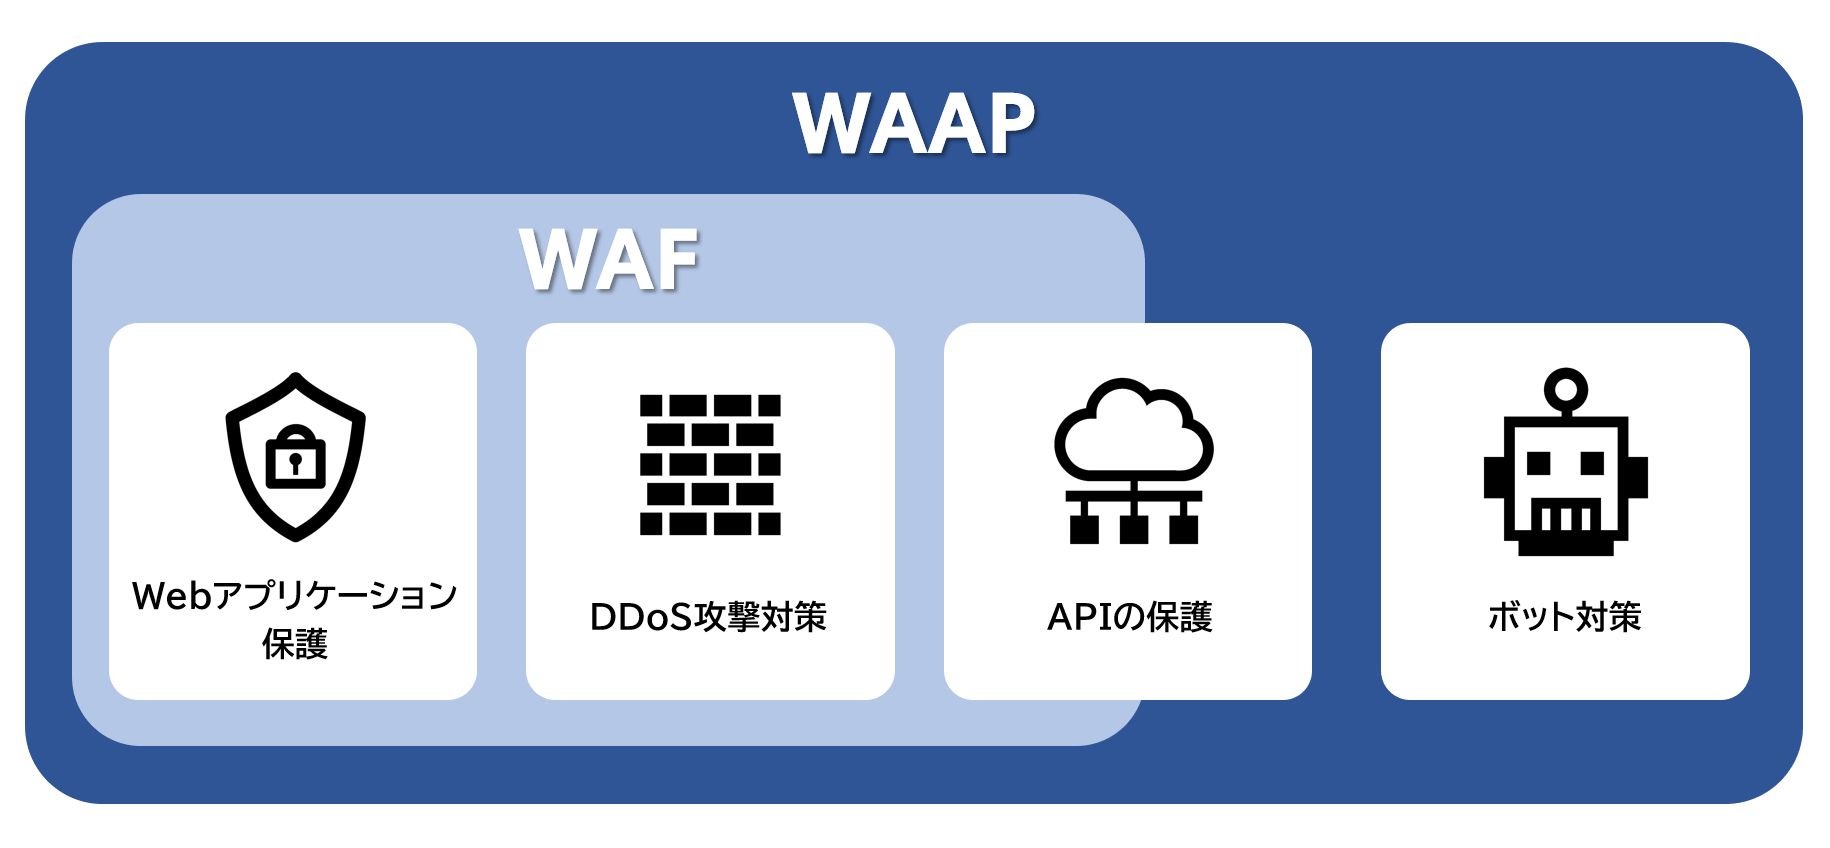 WAAPは、WAFなど4つのコア機能を含む包括ソリューション